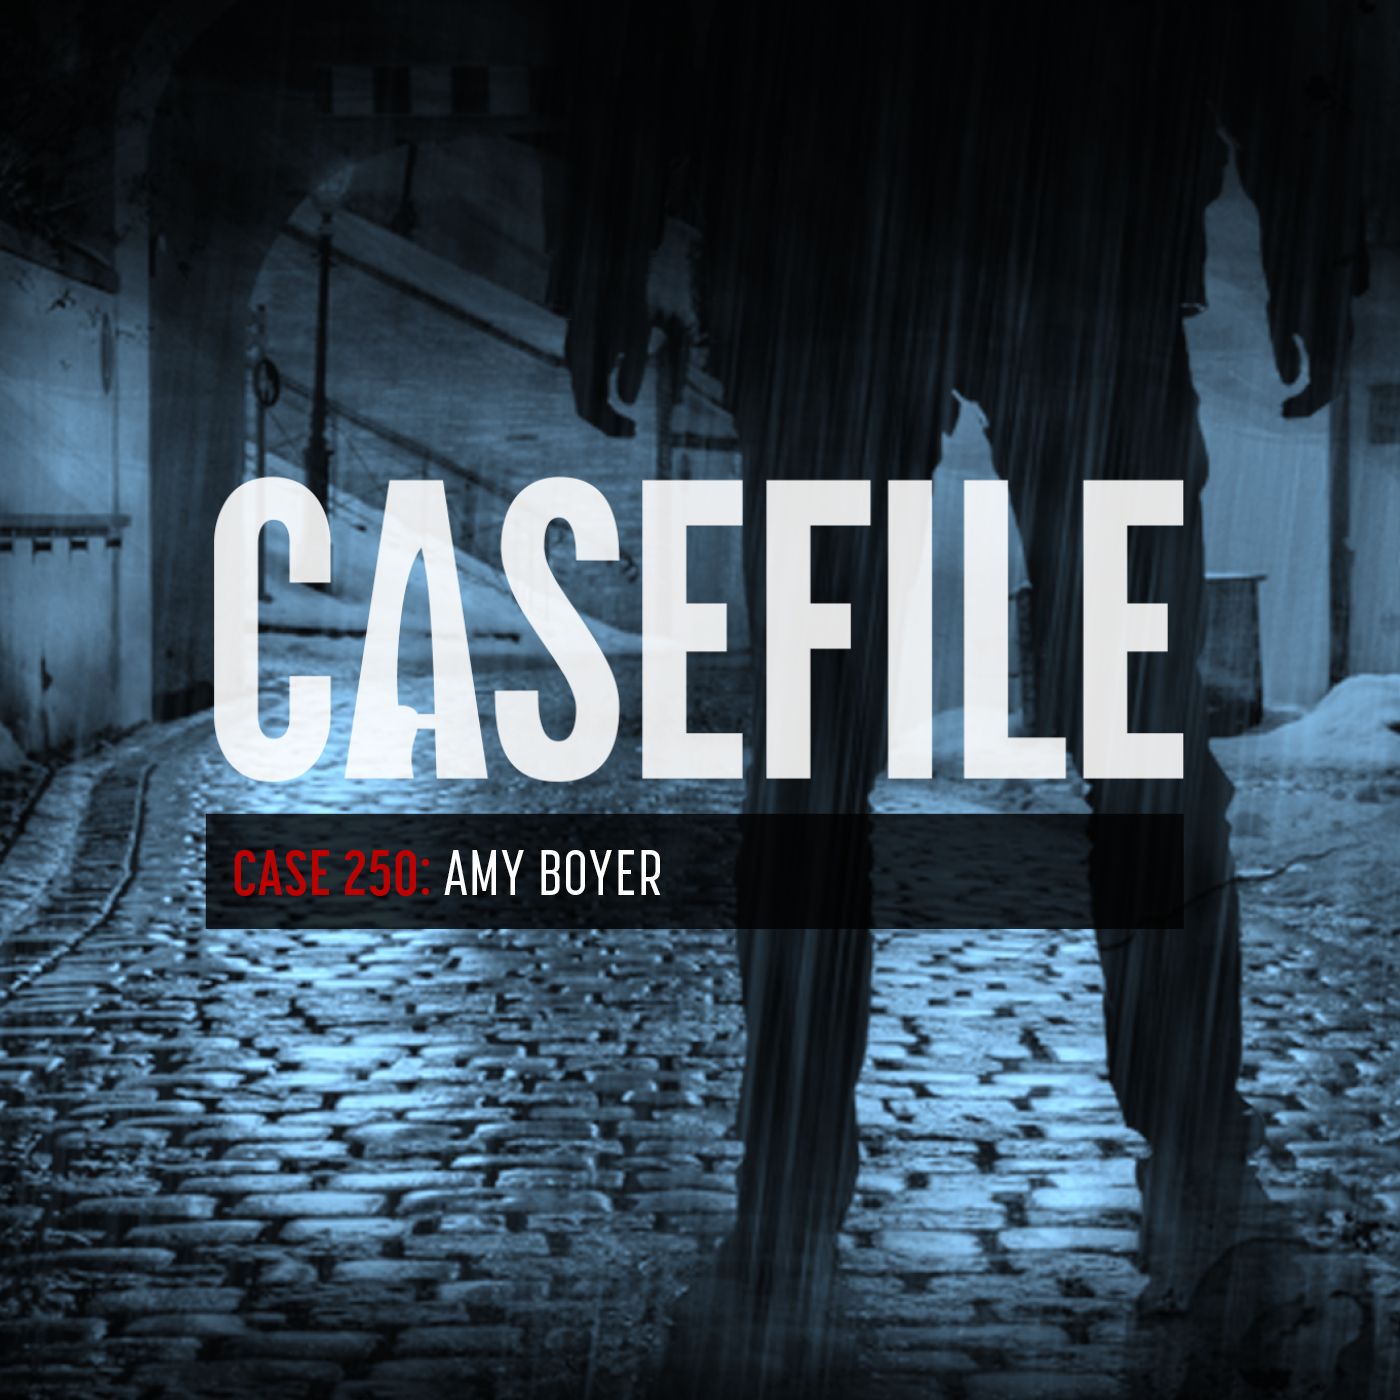 Case 250: Amy Boyer